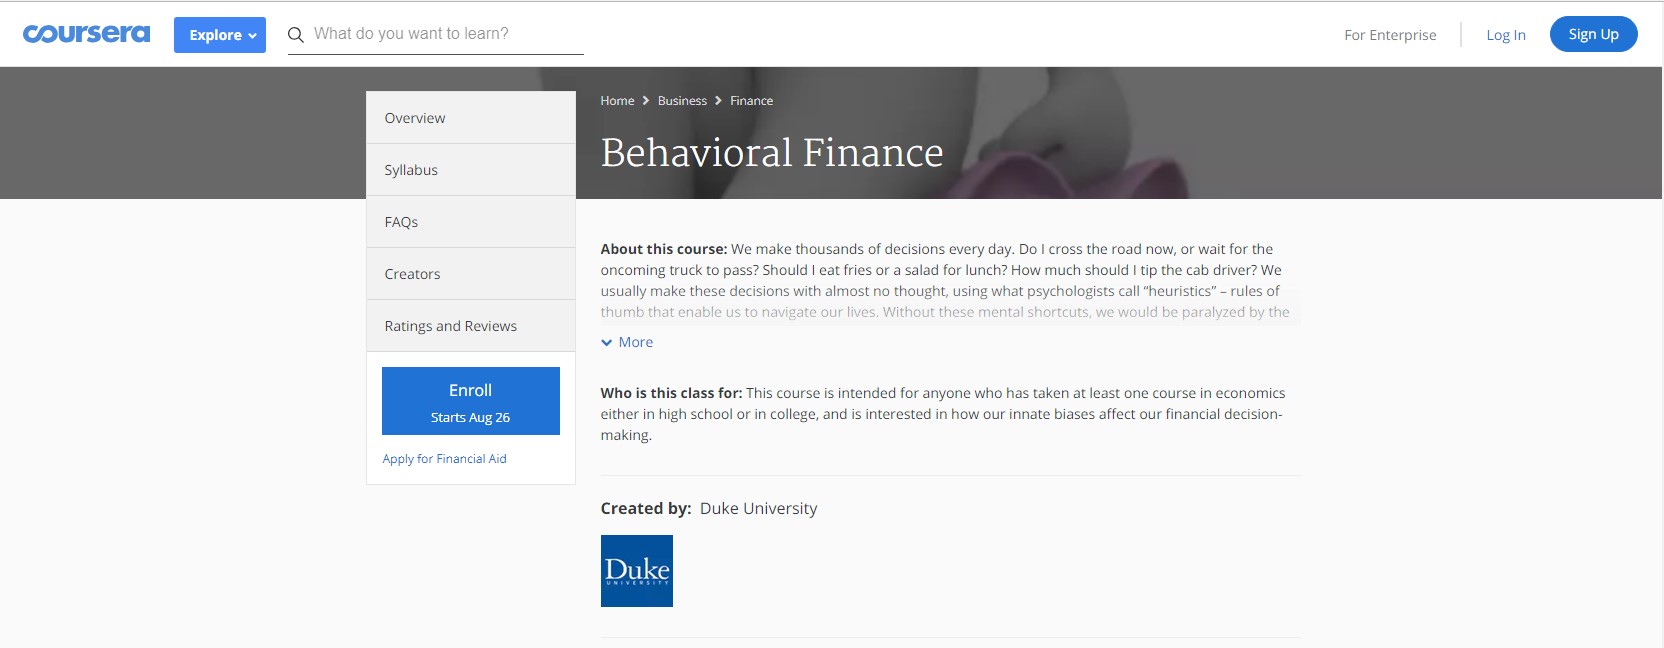 Coursera Behavioral Finance neuroeconomics